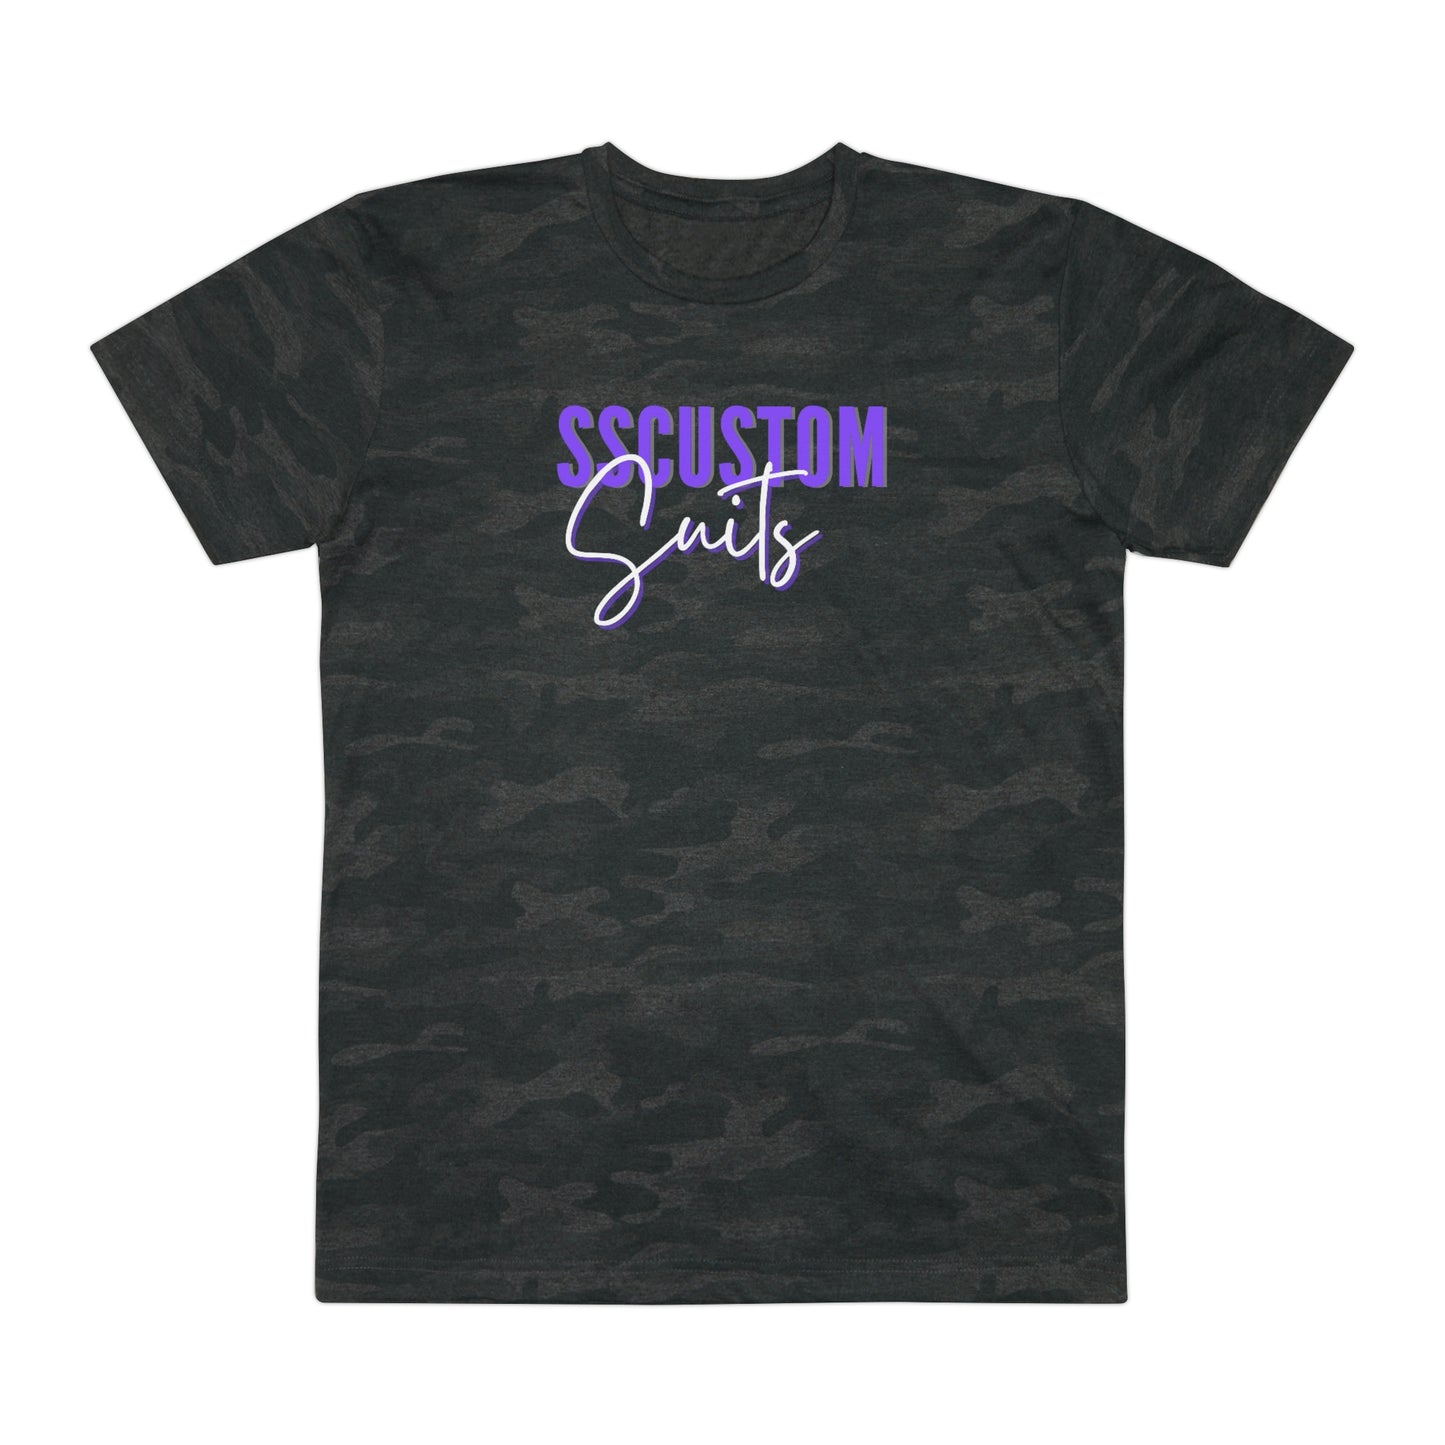 SSCustomSuit’s Men's Jersey T-Shirt